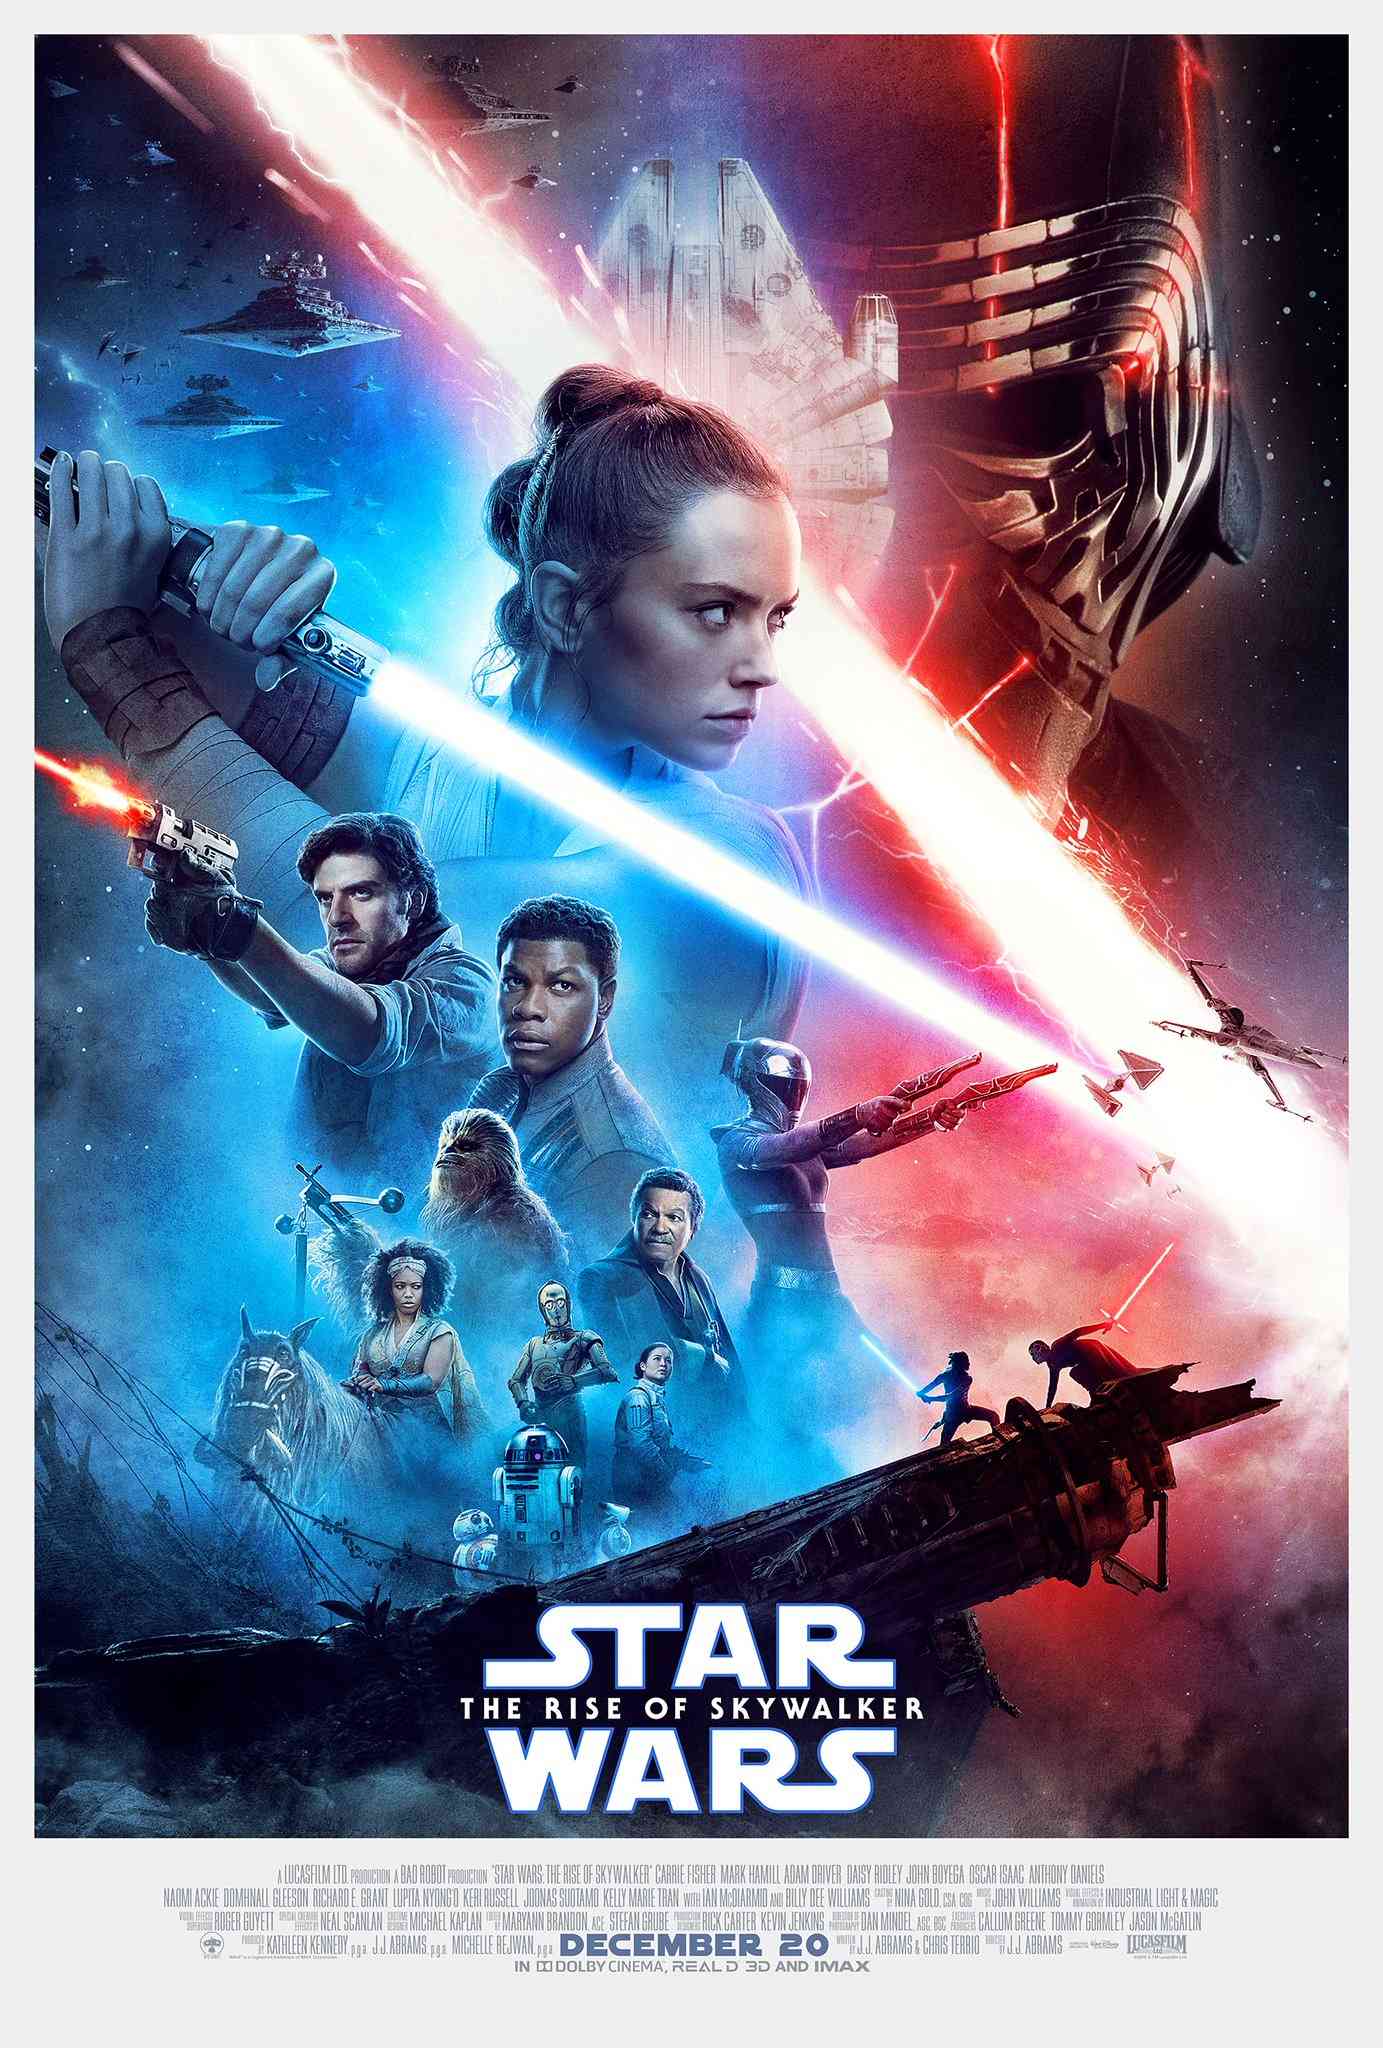 FULL MOVIE: Star Wars: Episode IX – The Rise of Skywalker (2019)